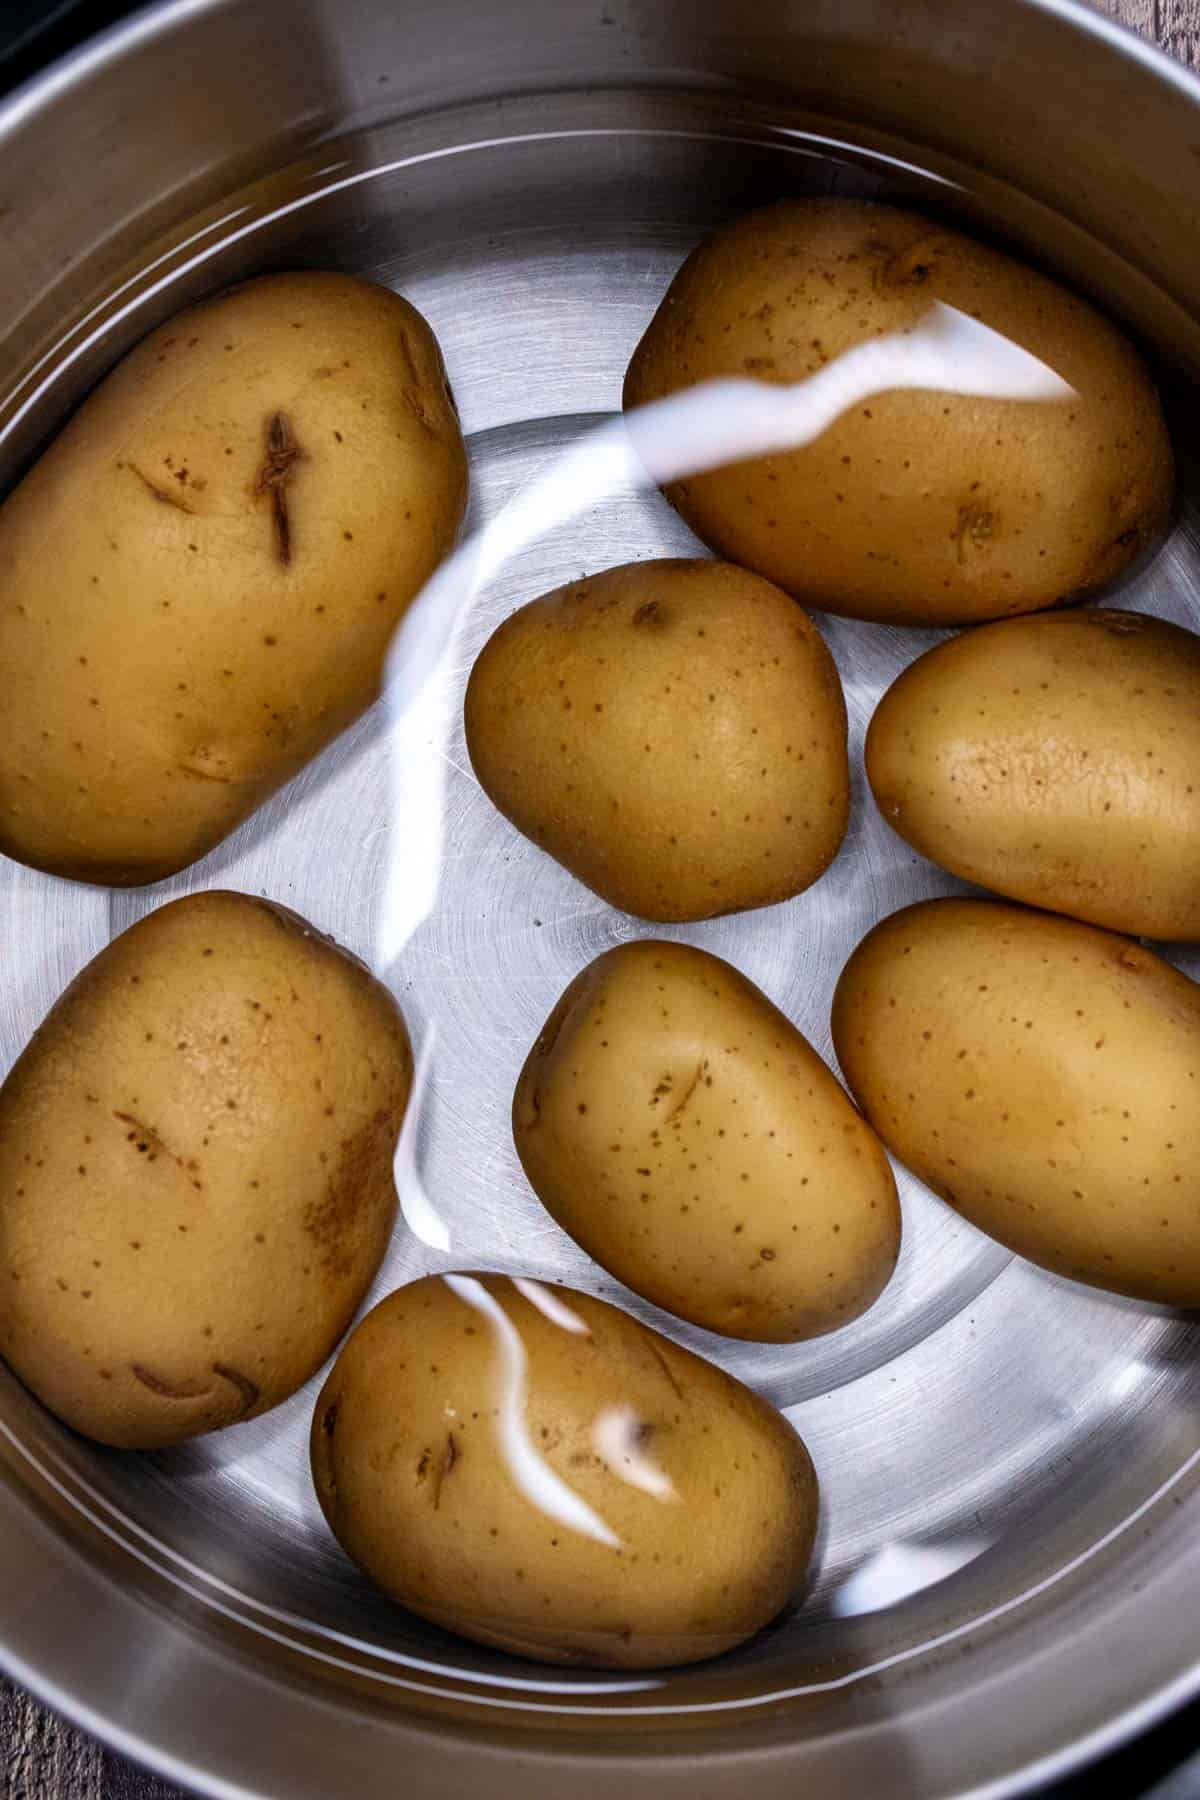 Unpeeled Yukon gold potatoes par boiled. 